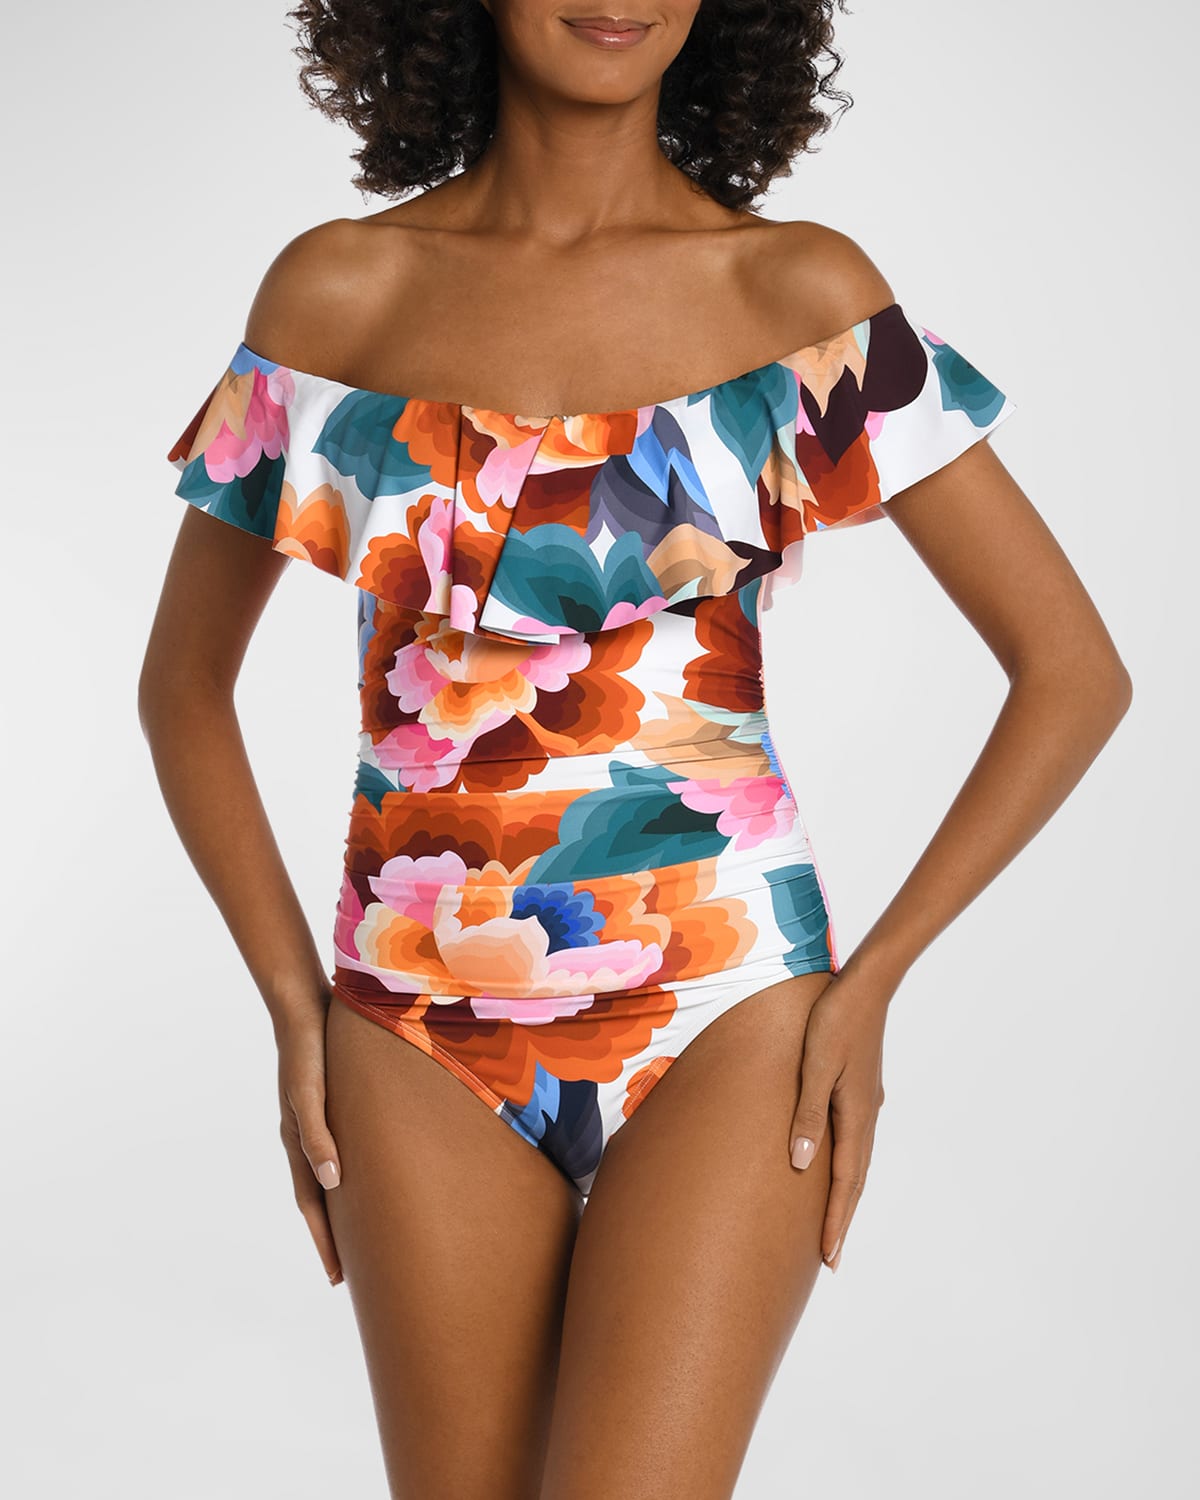 Vanansa Ruffled High Waisted Bikinis Sets for Women Two Piece Tummy Control Bathing Suits Asymmetric Ruffle Swimwear 